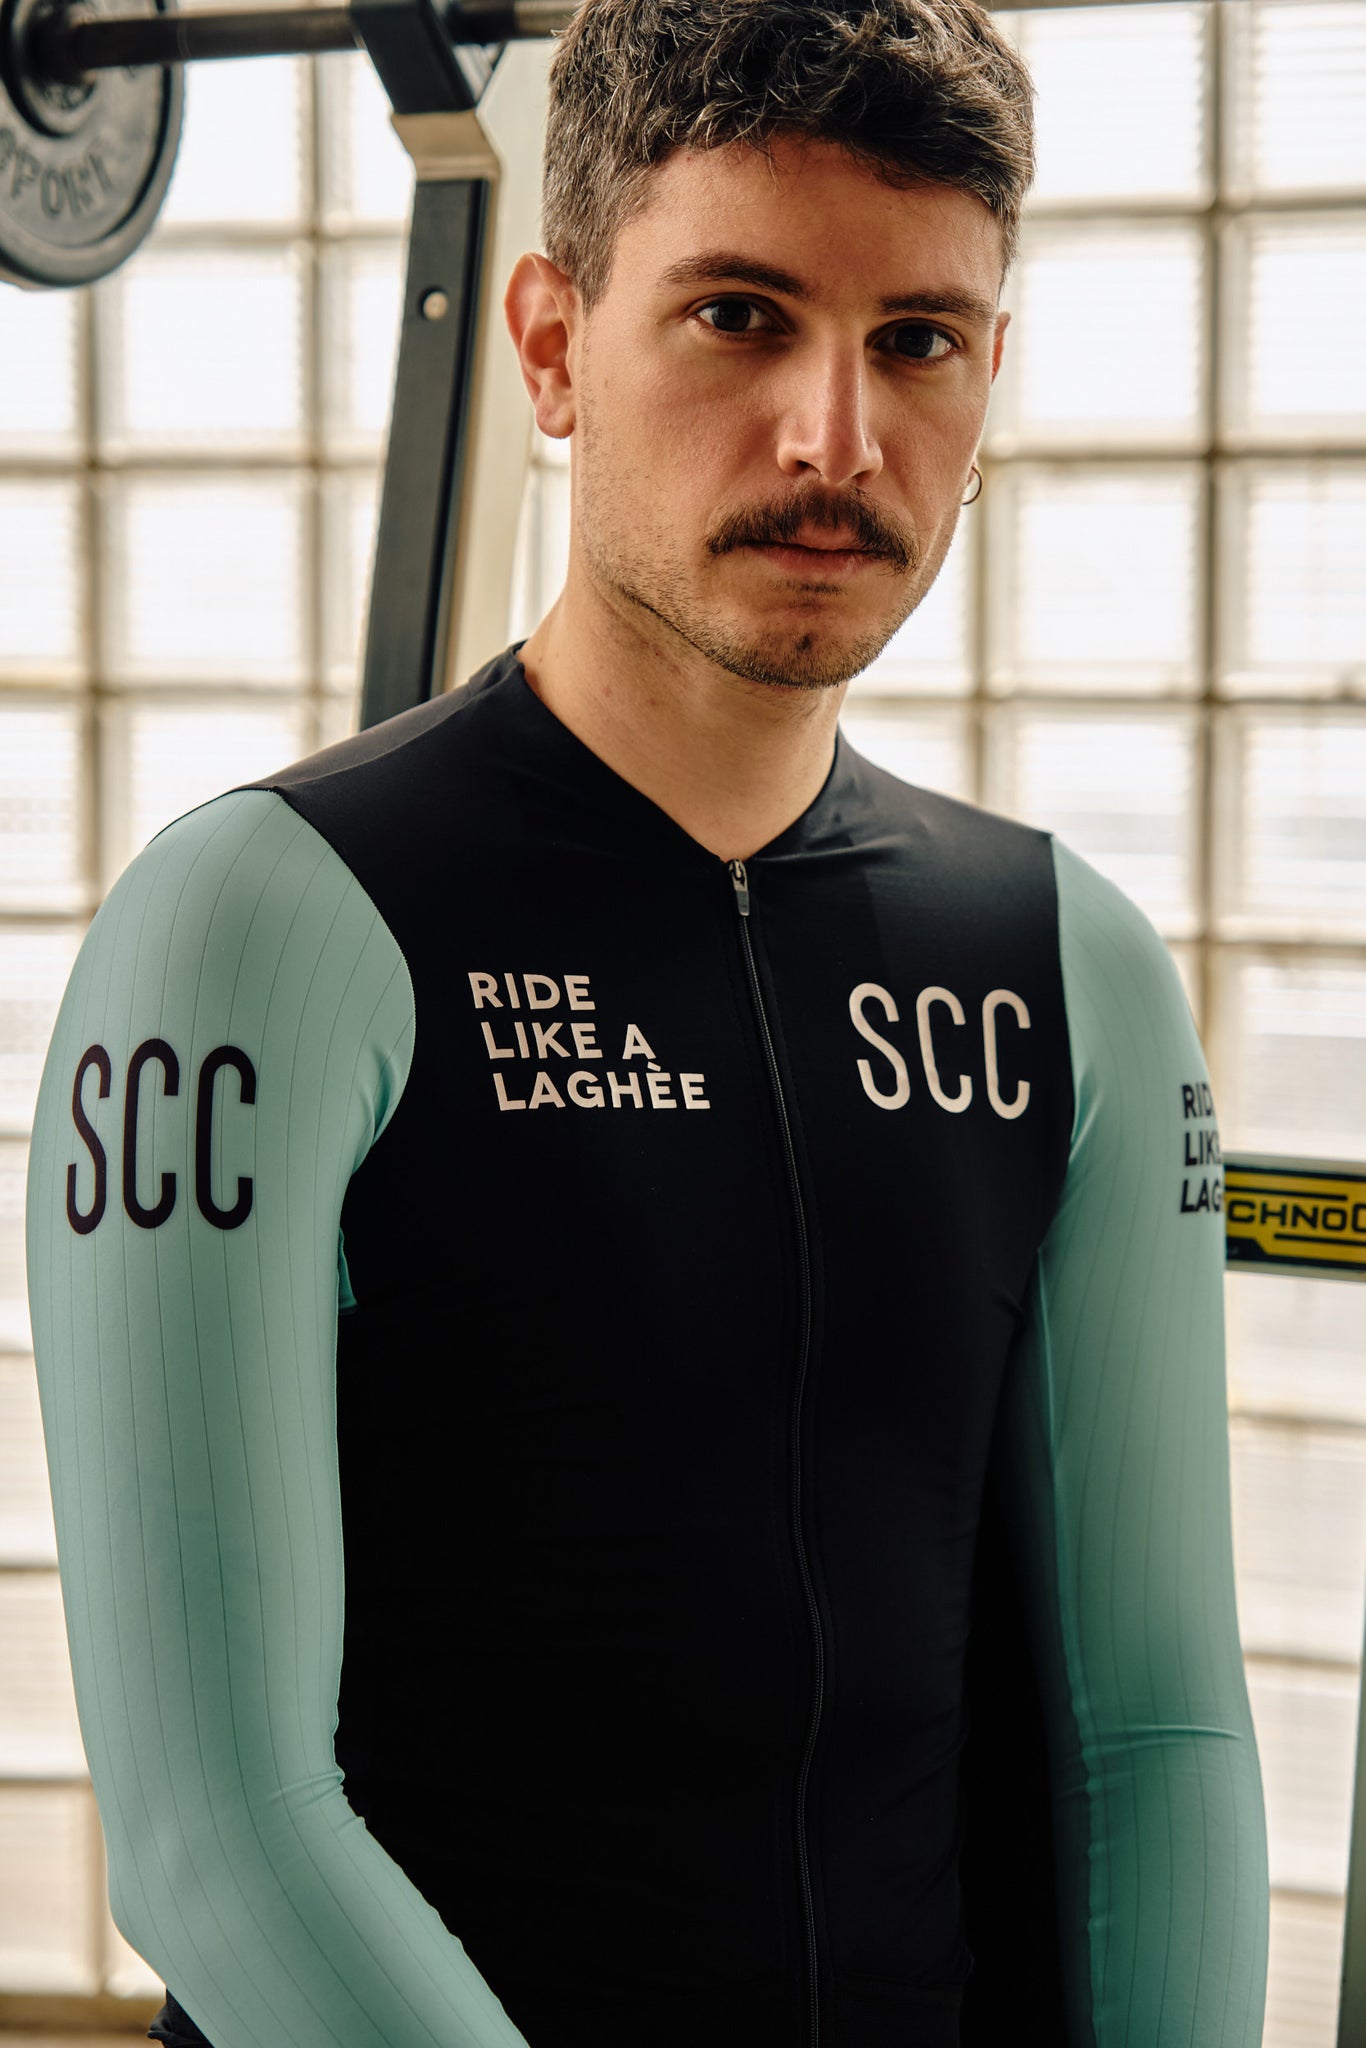 SCC Long sleeves aero jersey - Light green / Black